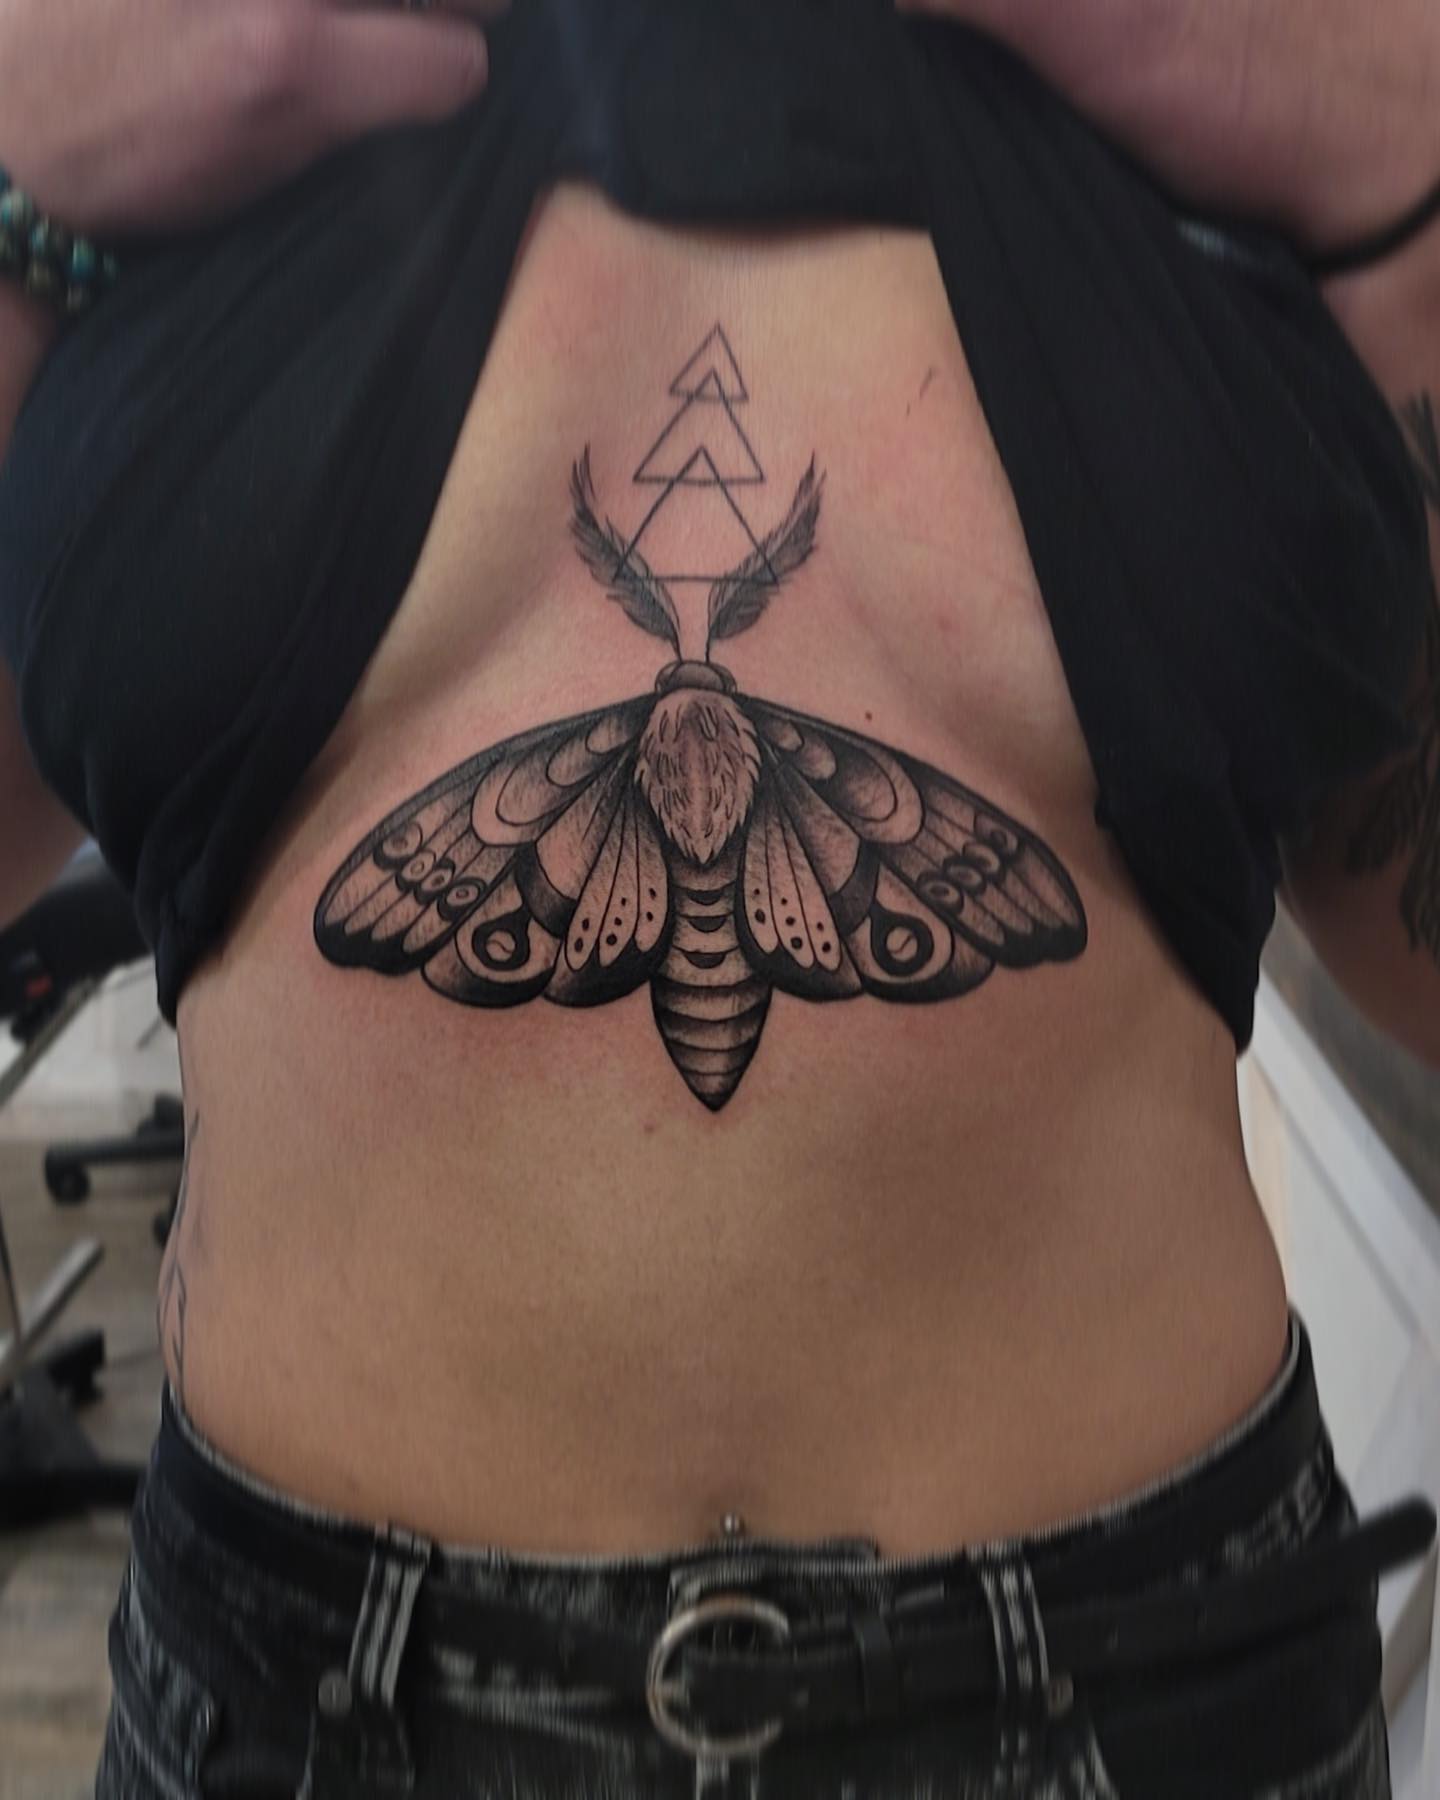 Tatuaje de esternón de insecto